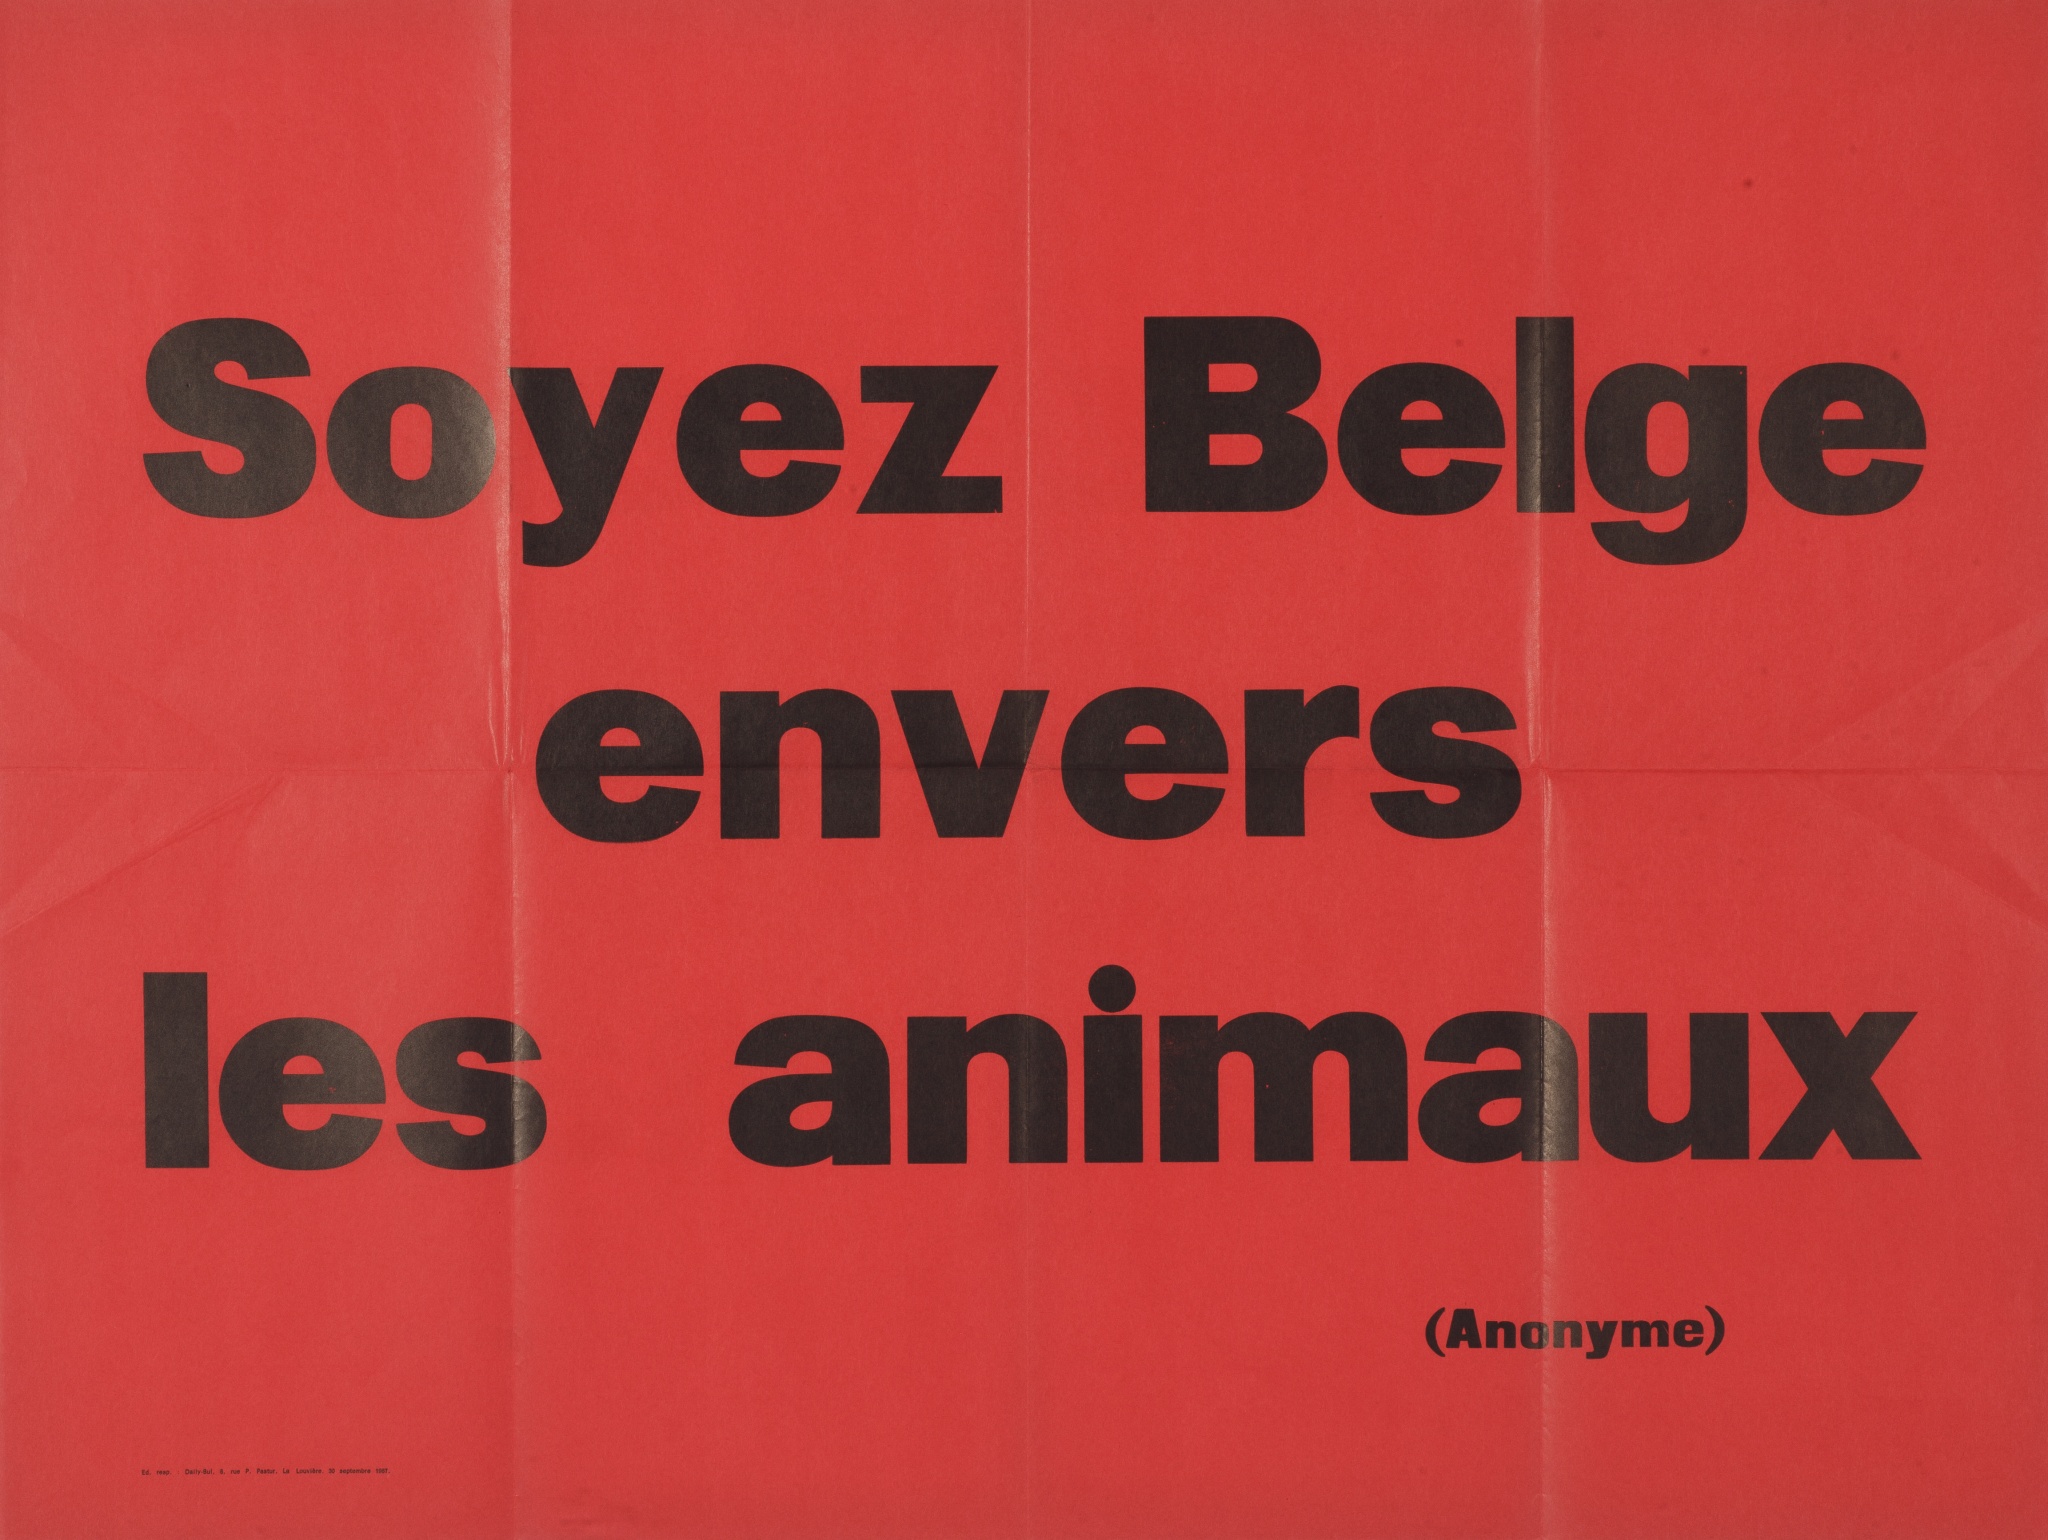 Soyez belge envers les animaux